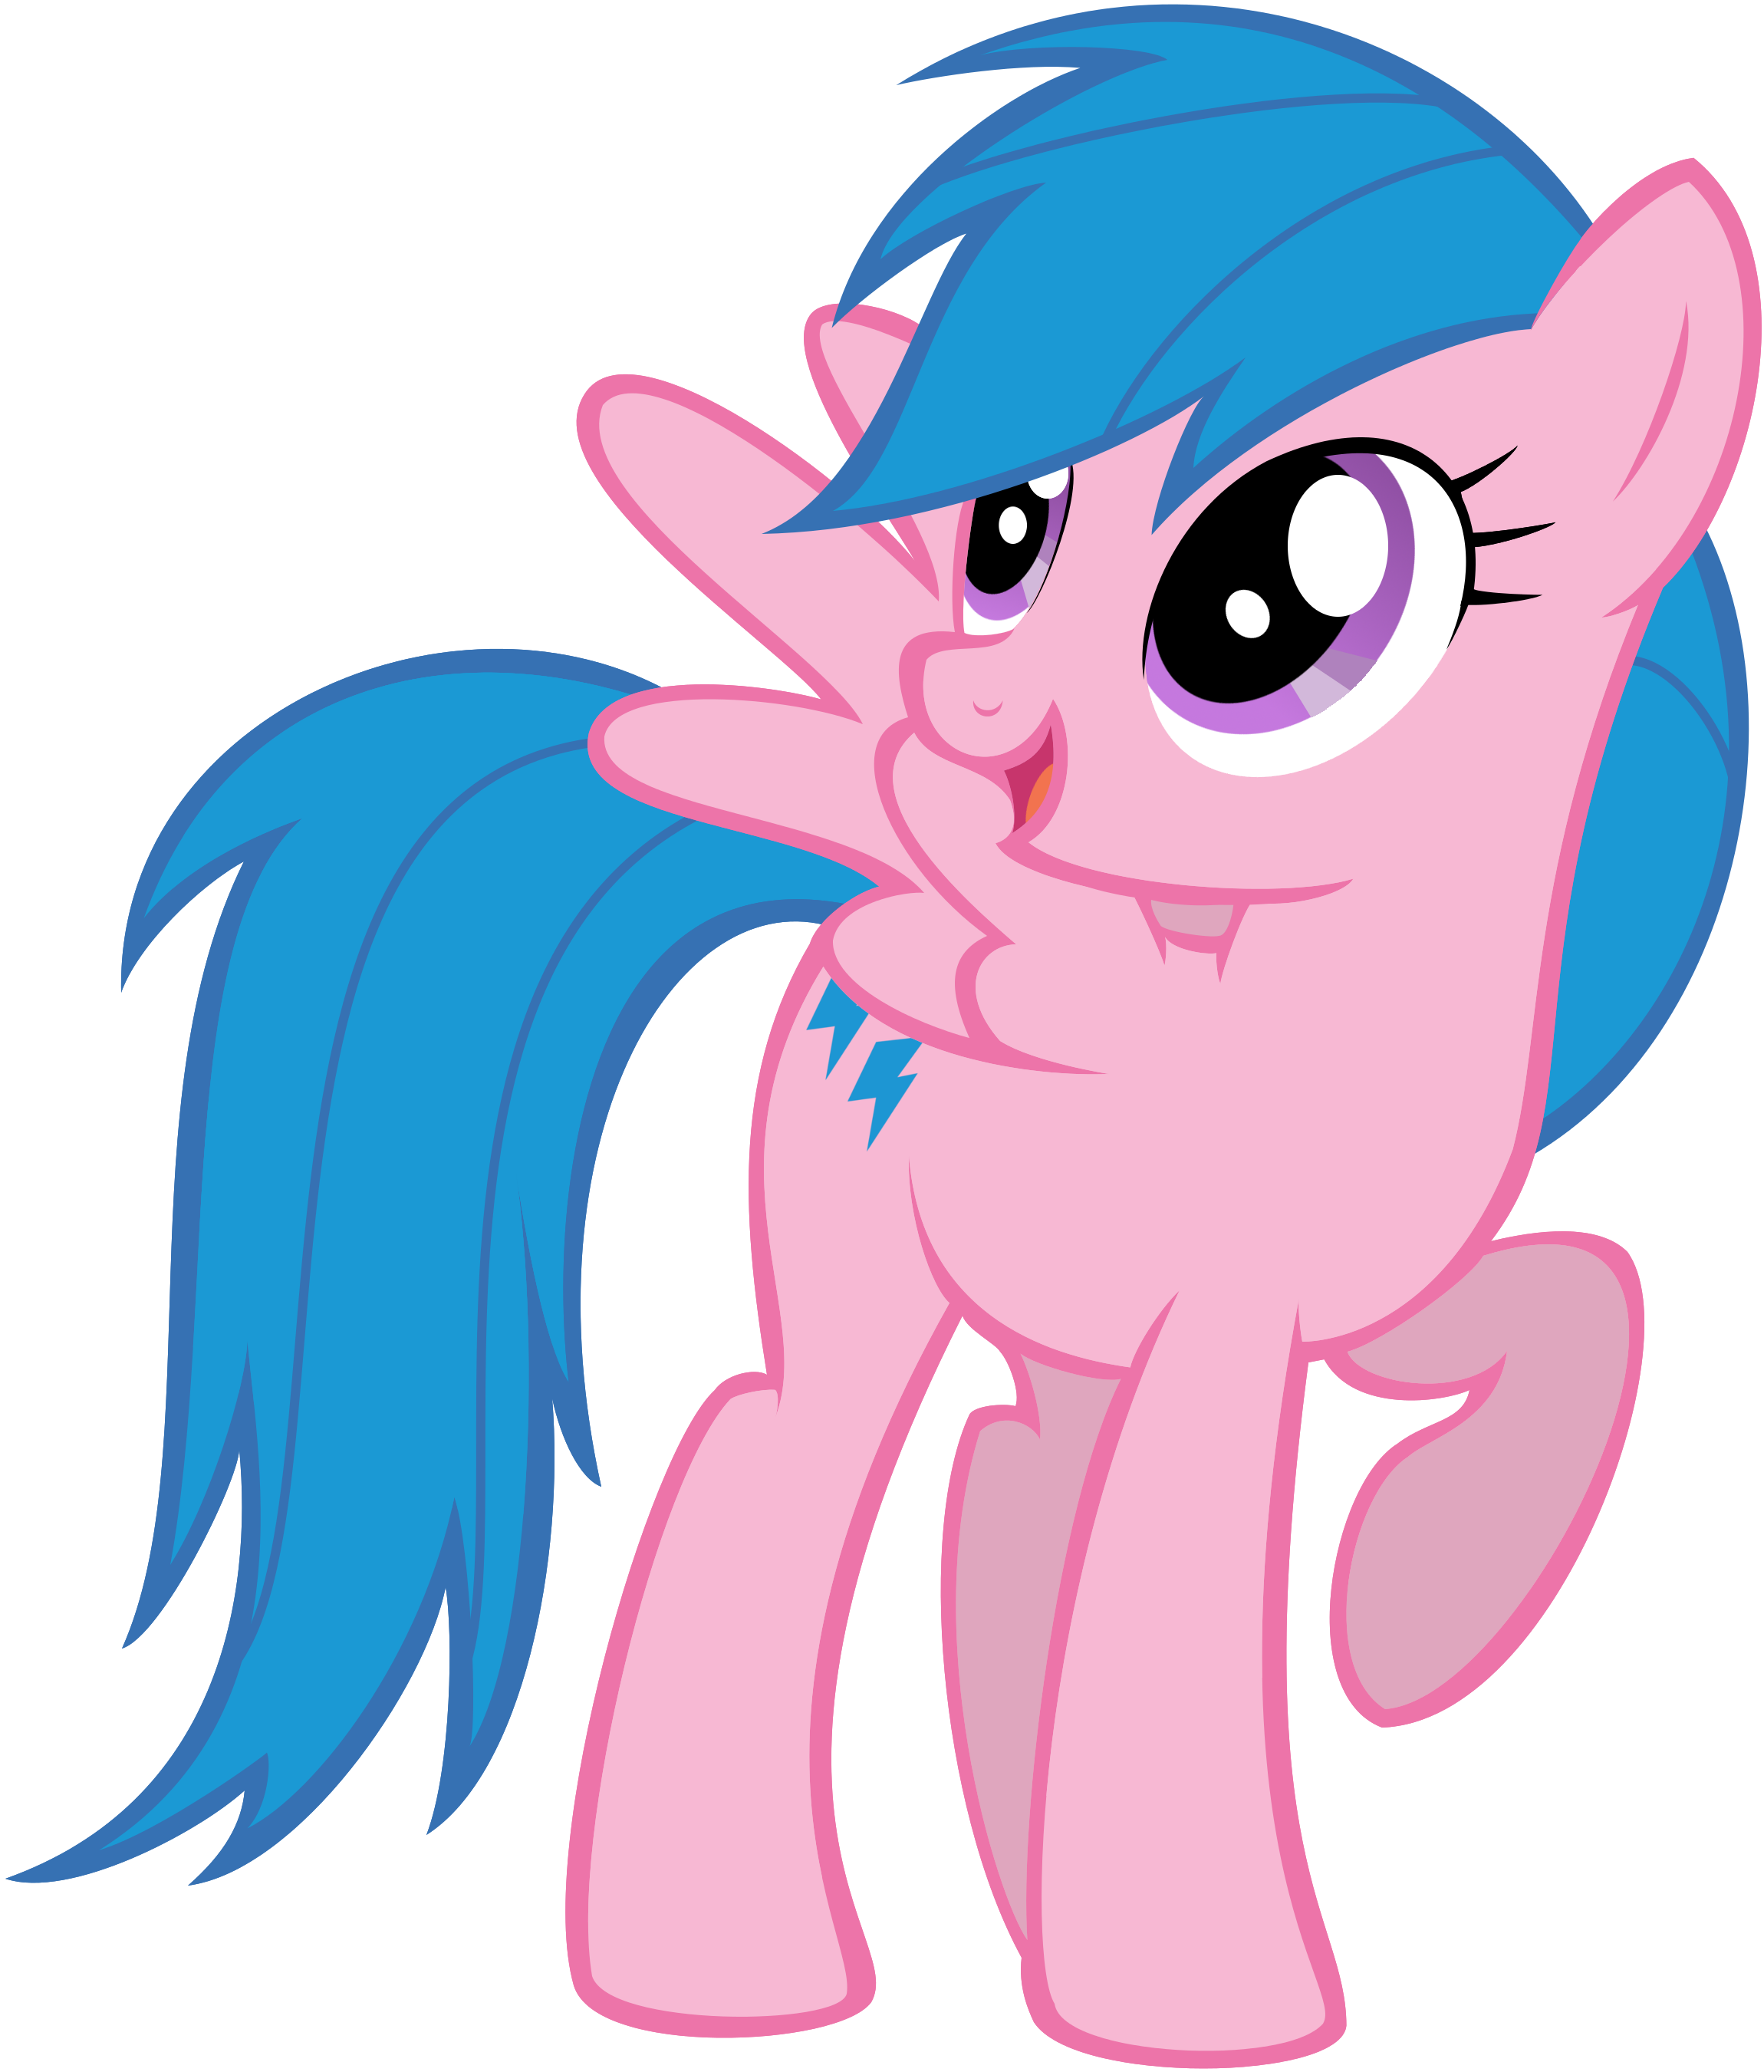 My little pony без. Файрфлай MLP. Маленькие пони. МЛП персонажи. Пони с синими волосами.